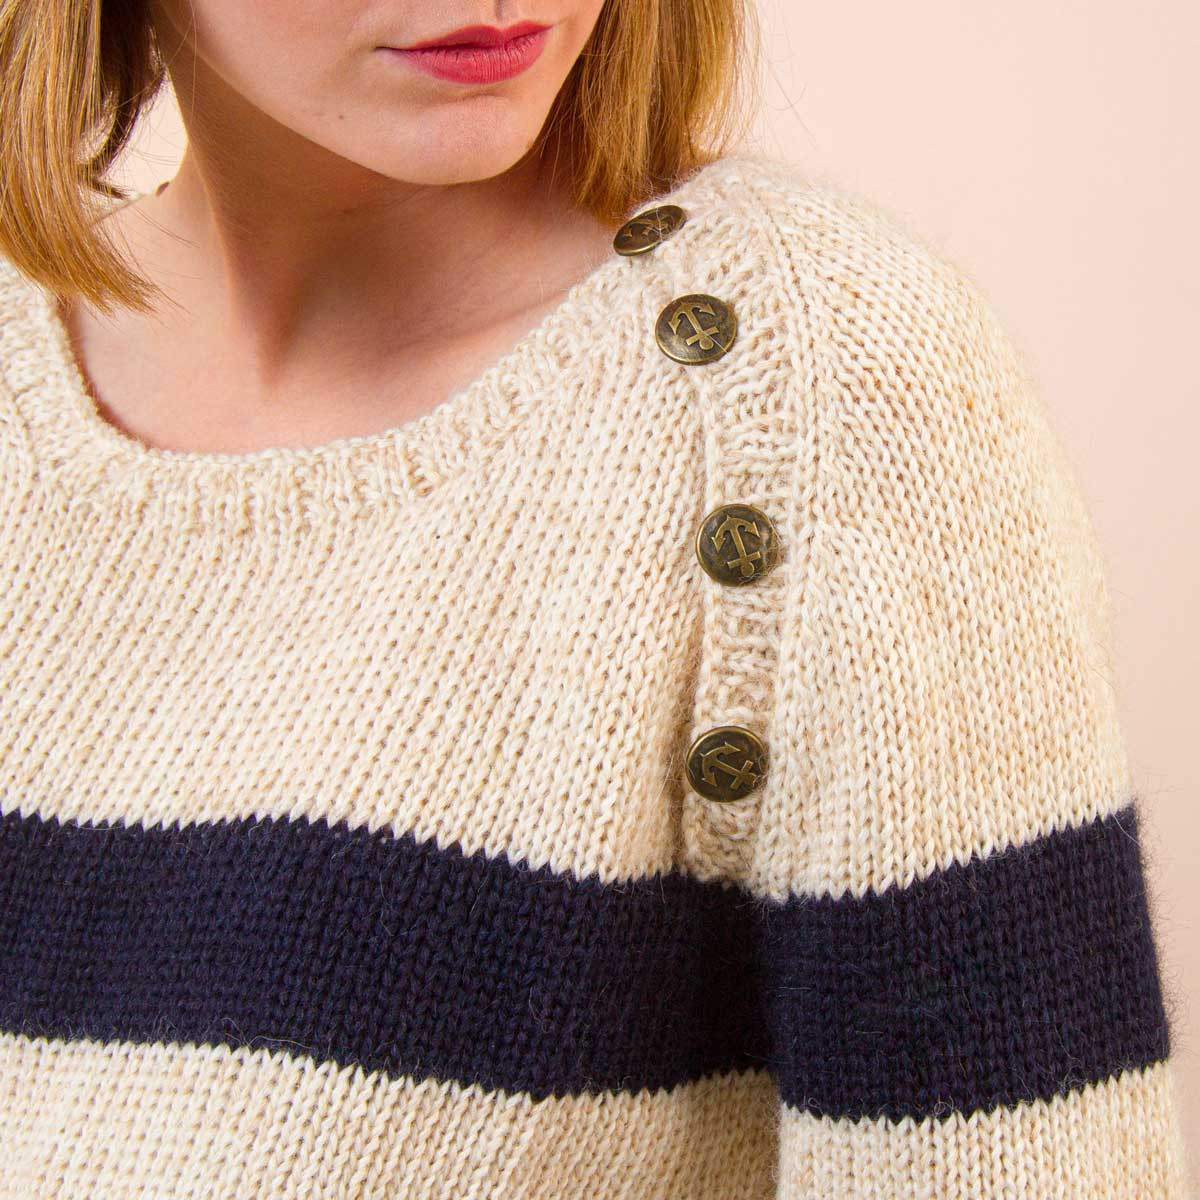 Majolis ready-to-knit sweater